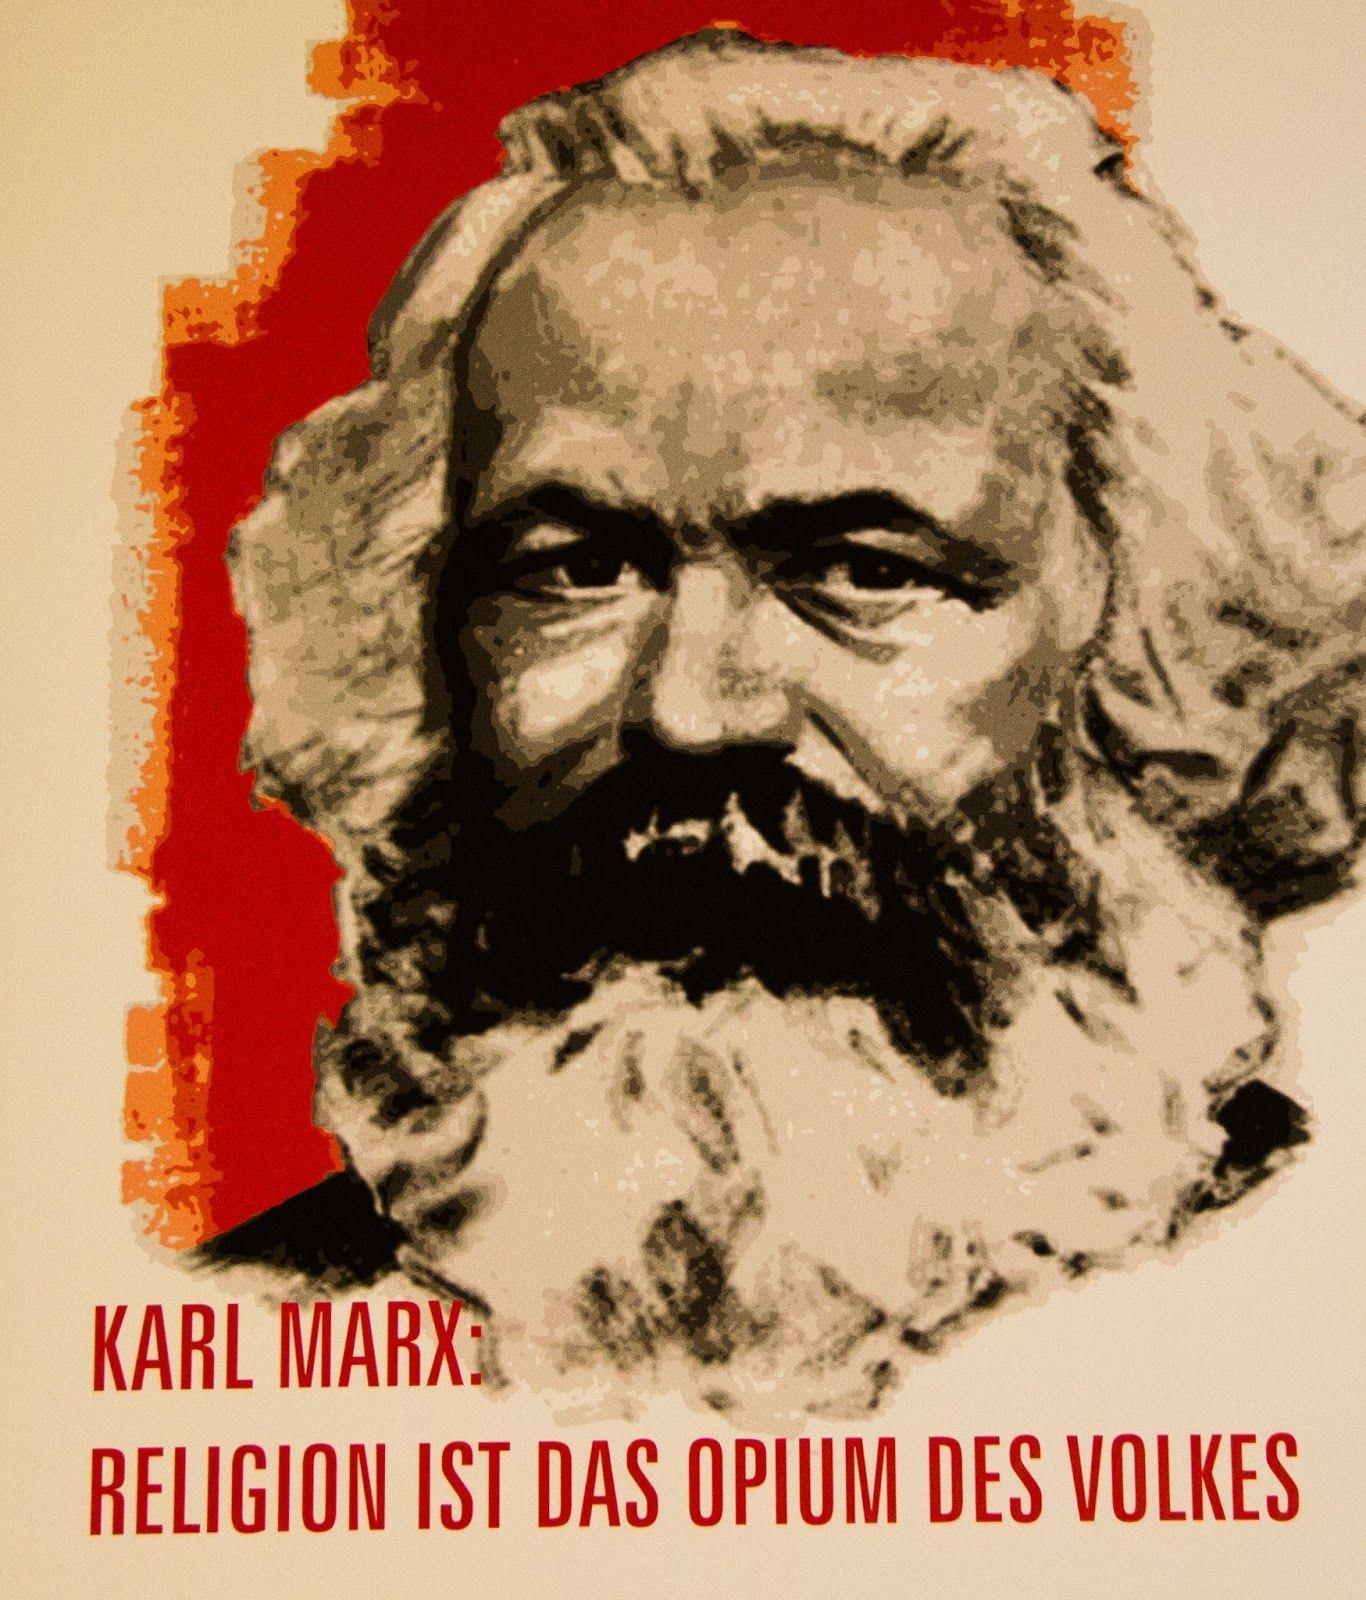 Celebrities Karl Marx 1256x1214 » HD Backgrounds Image